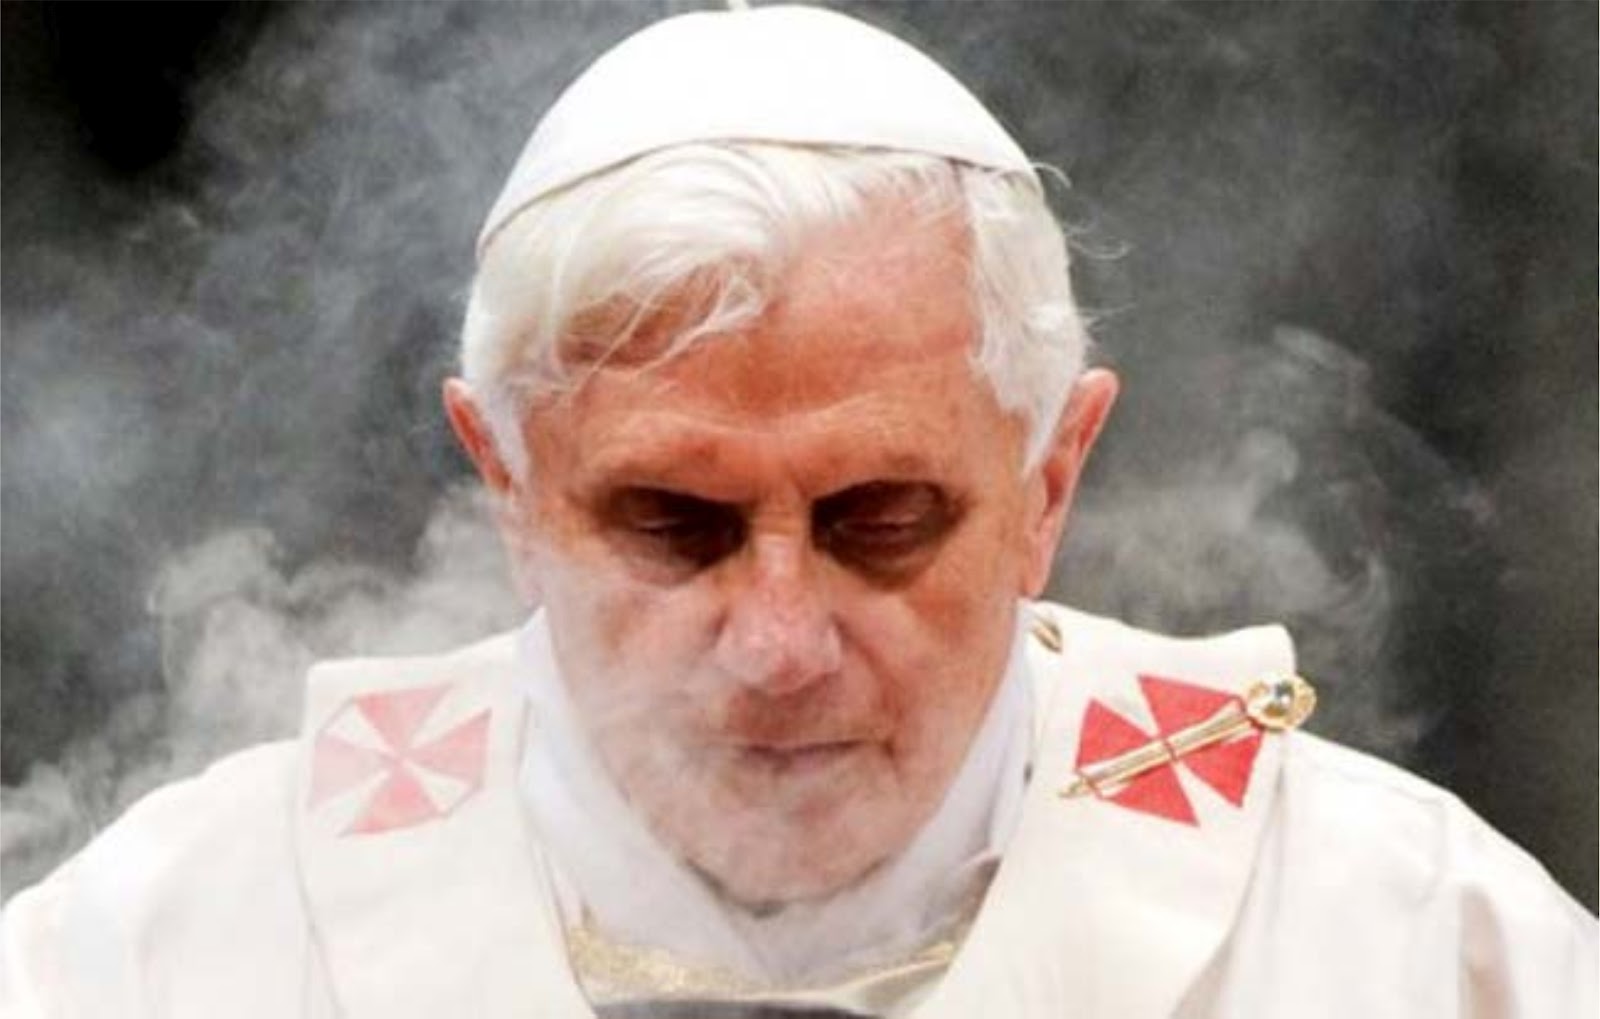 Josef-Ratzinger-Pope-Benedict-XVI.-Born-1927.-Mass.-Vatican.-Incense.-1ab..jpg